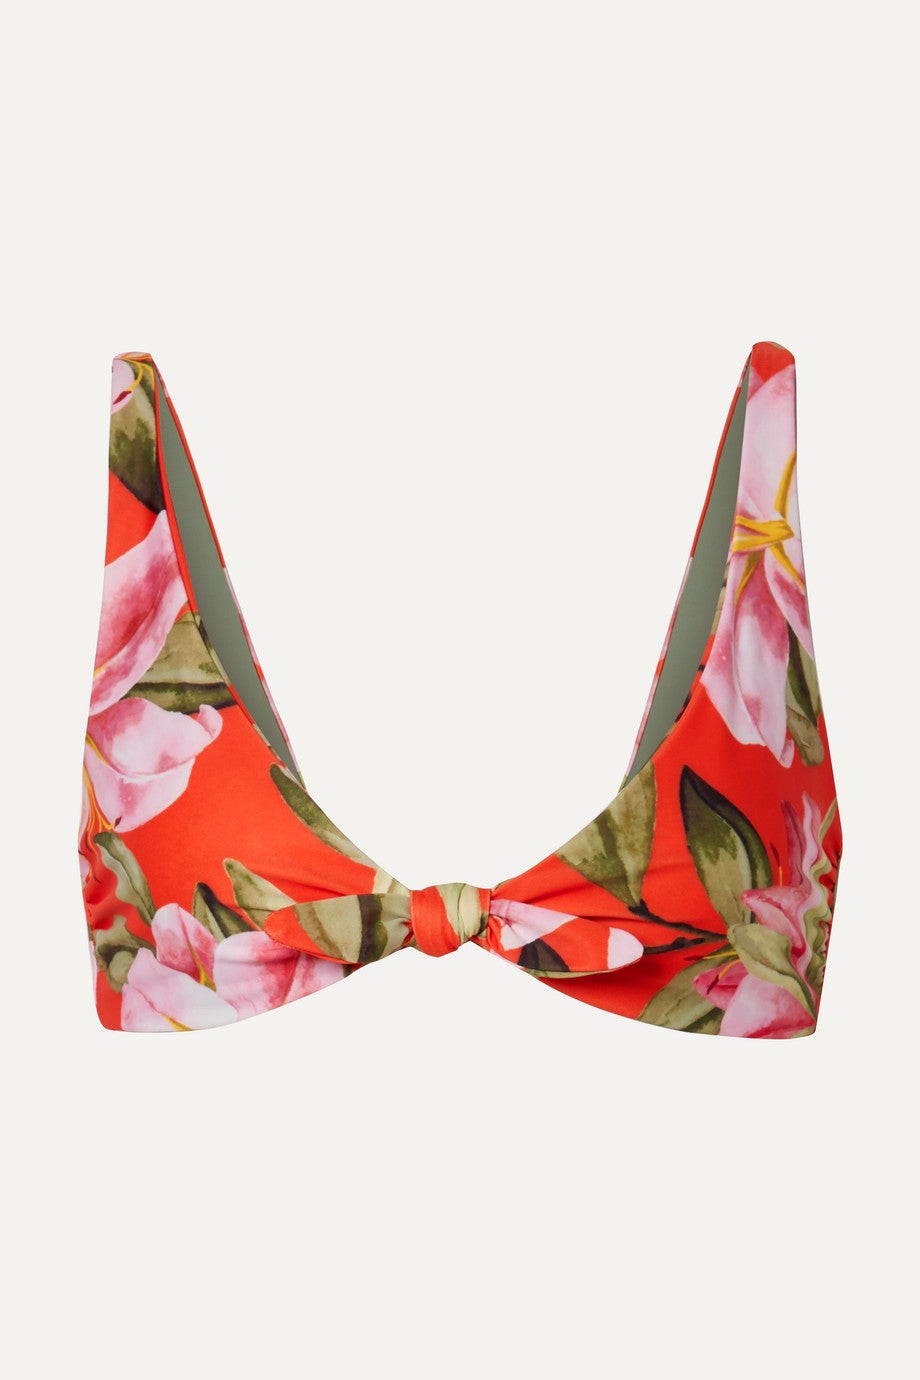 Mara Hoffman + Rio Knotted Floral-Print Bikini